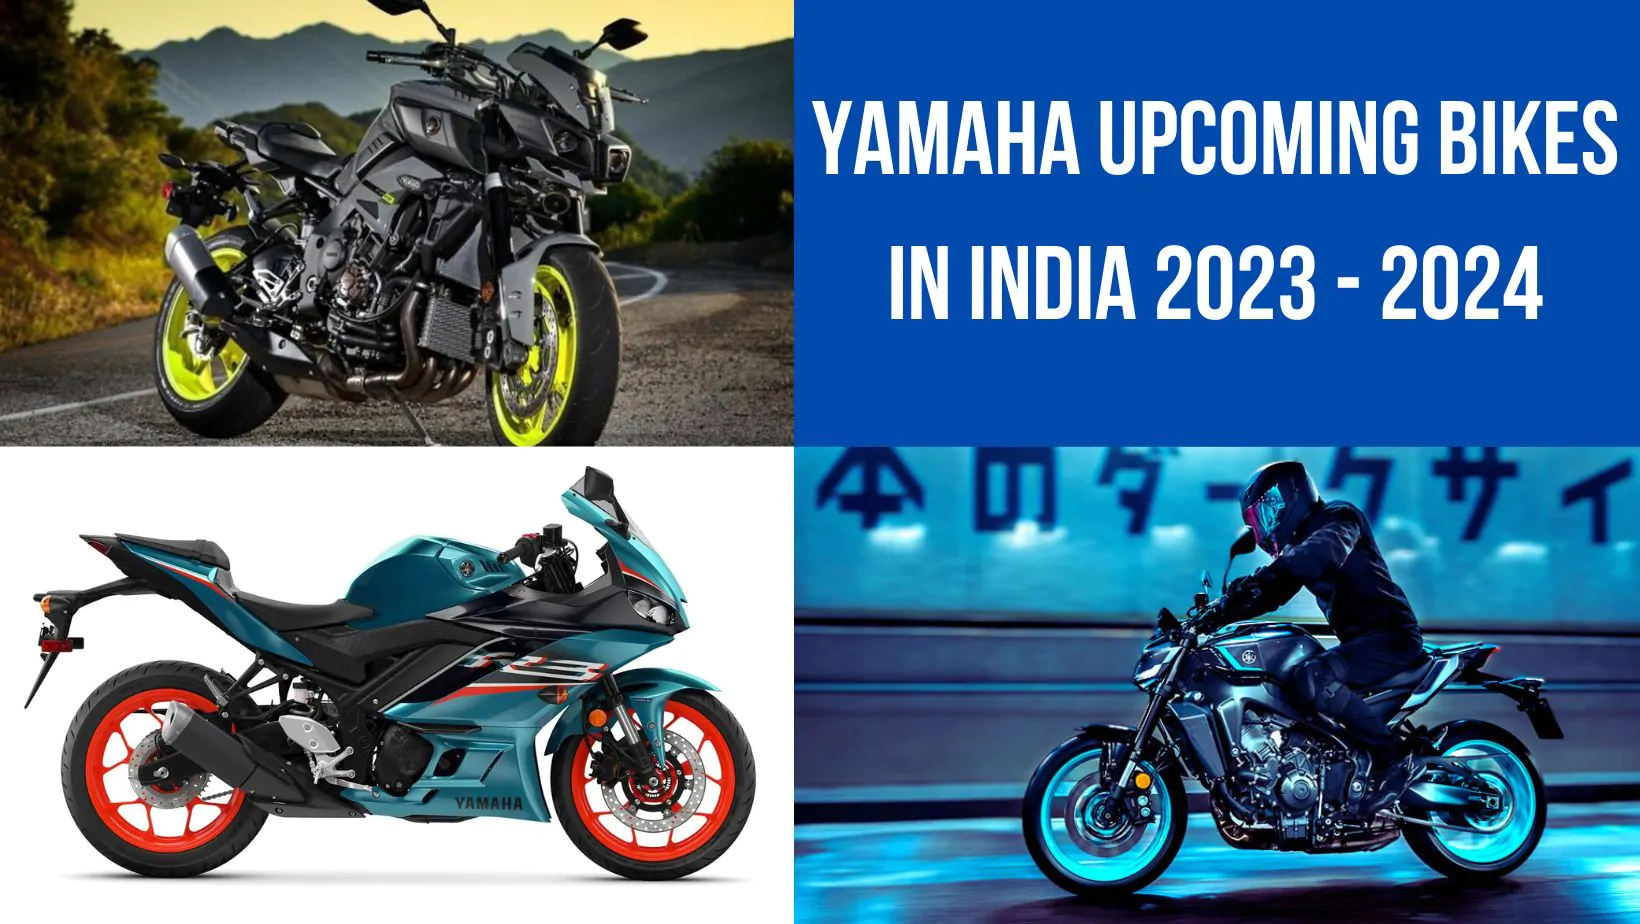 Yamaha Upcoming Bikes in India 2023 - 2024